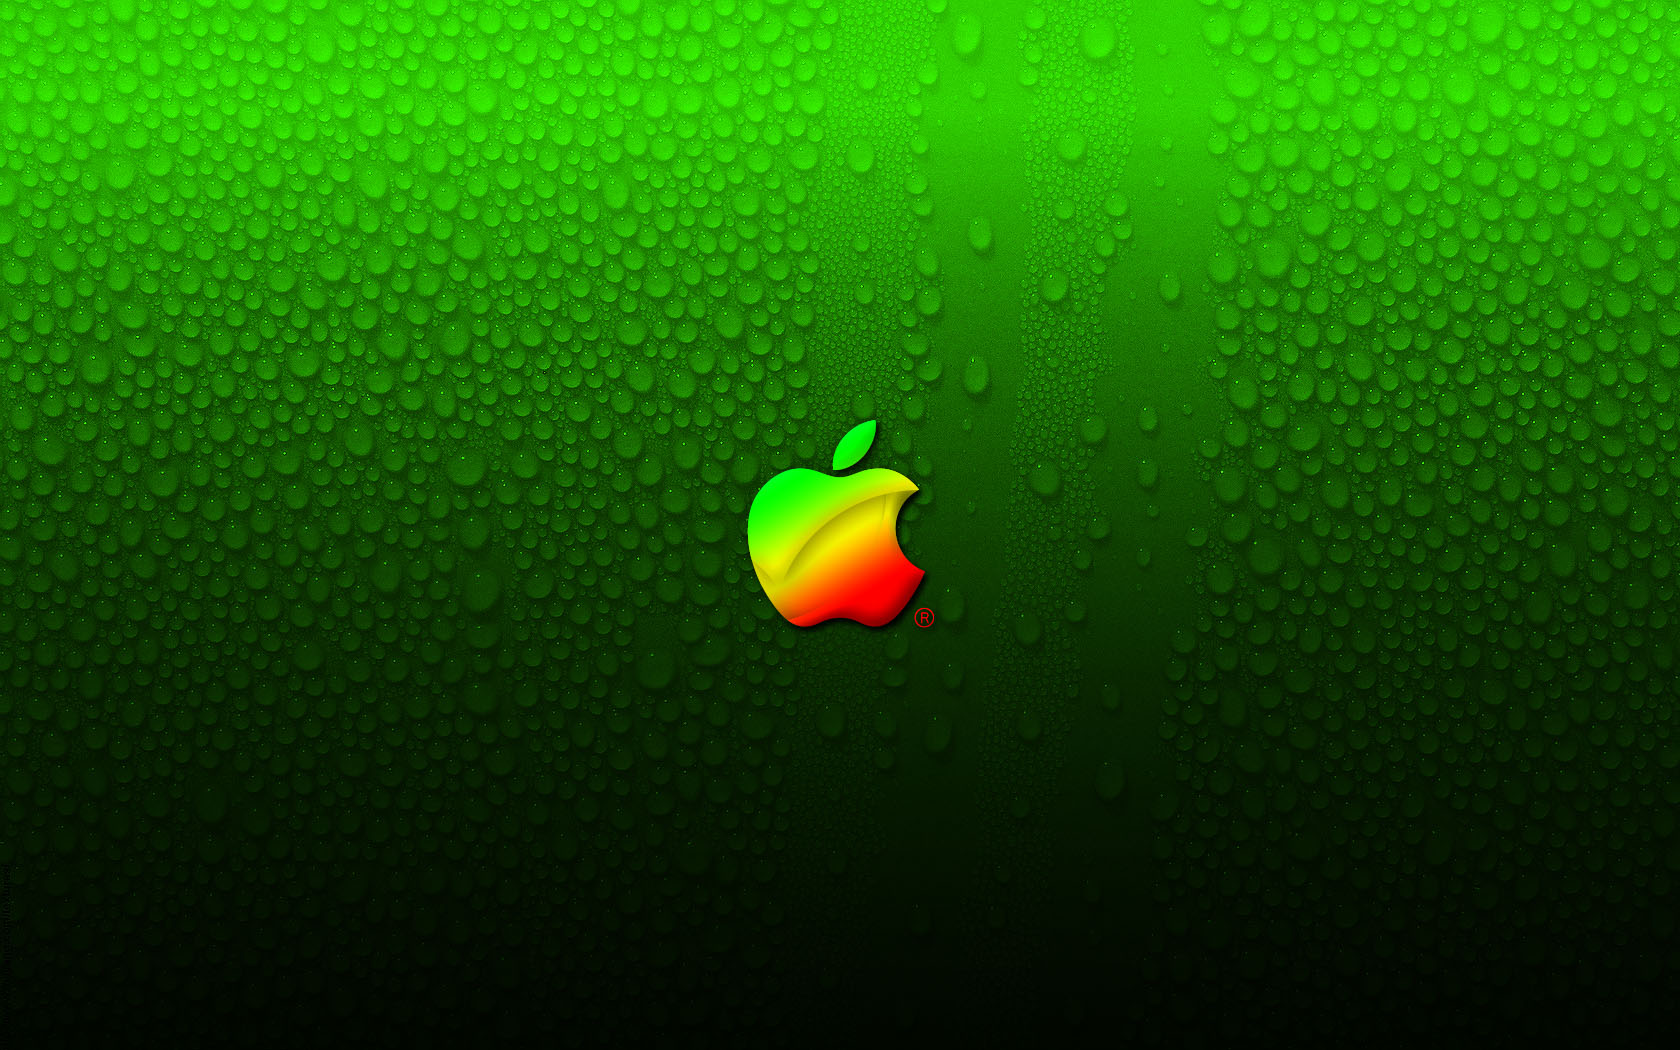  Best Hd Apple Wallpapers Apple Wallpapers Desktop Backgrounds 1680x1050